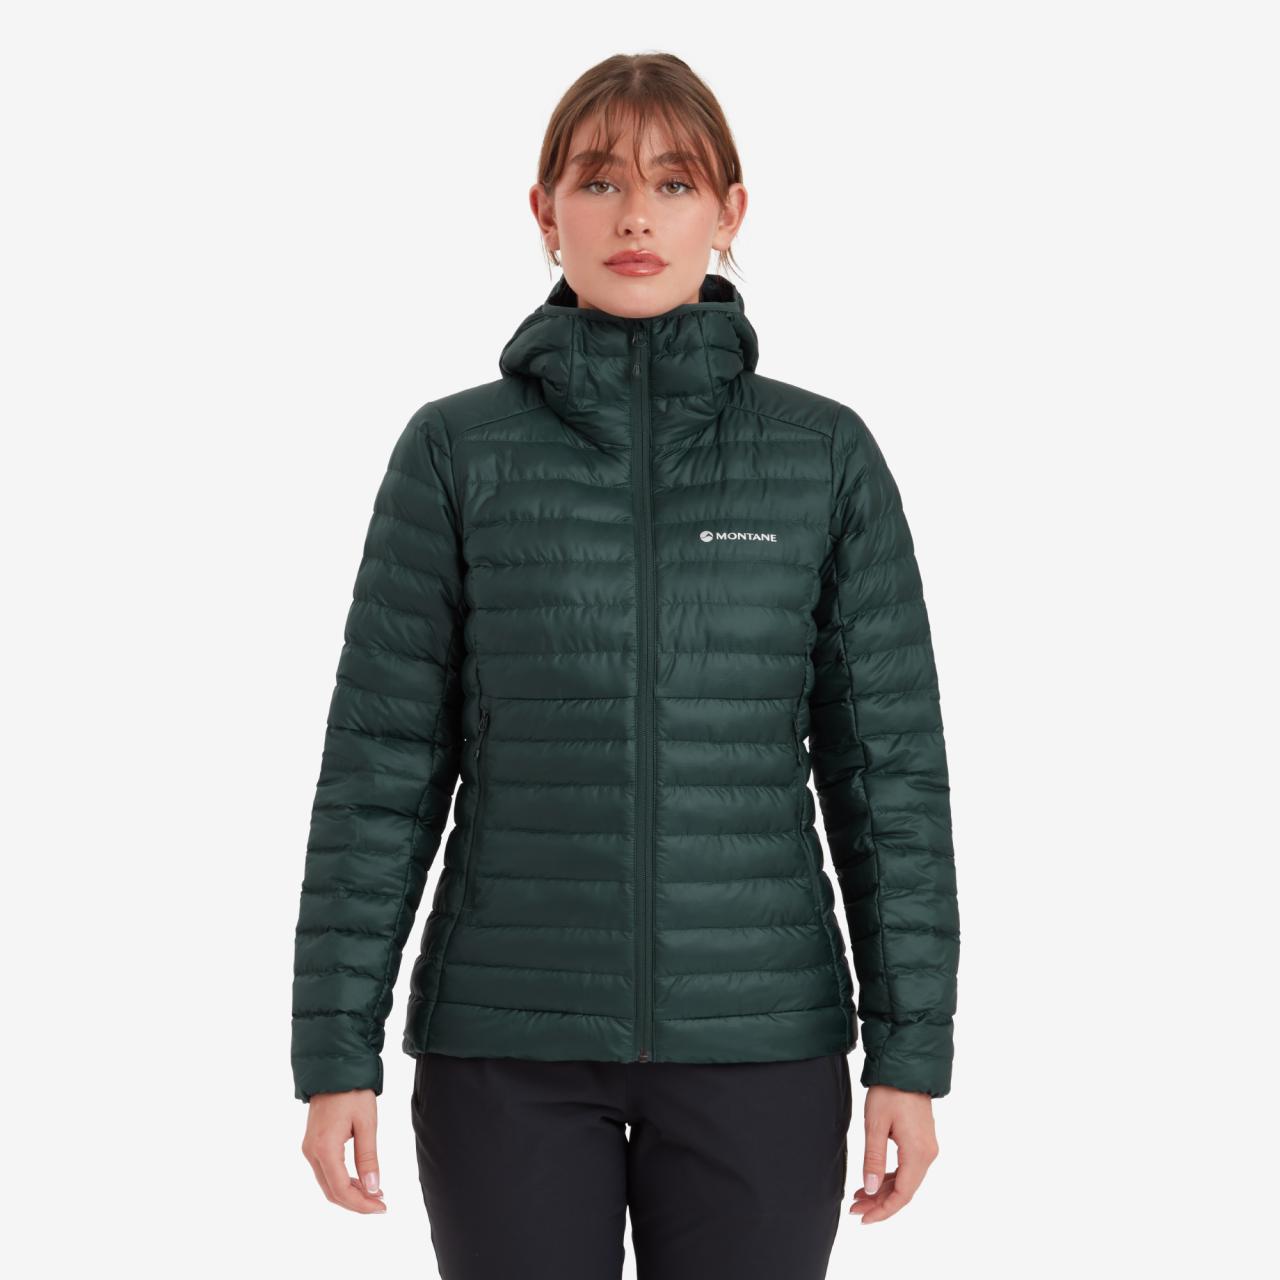 FEM ICARUS HOODIE-DEEP FOREST-UK16/XL dámská bunda tmavě zelená